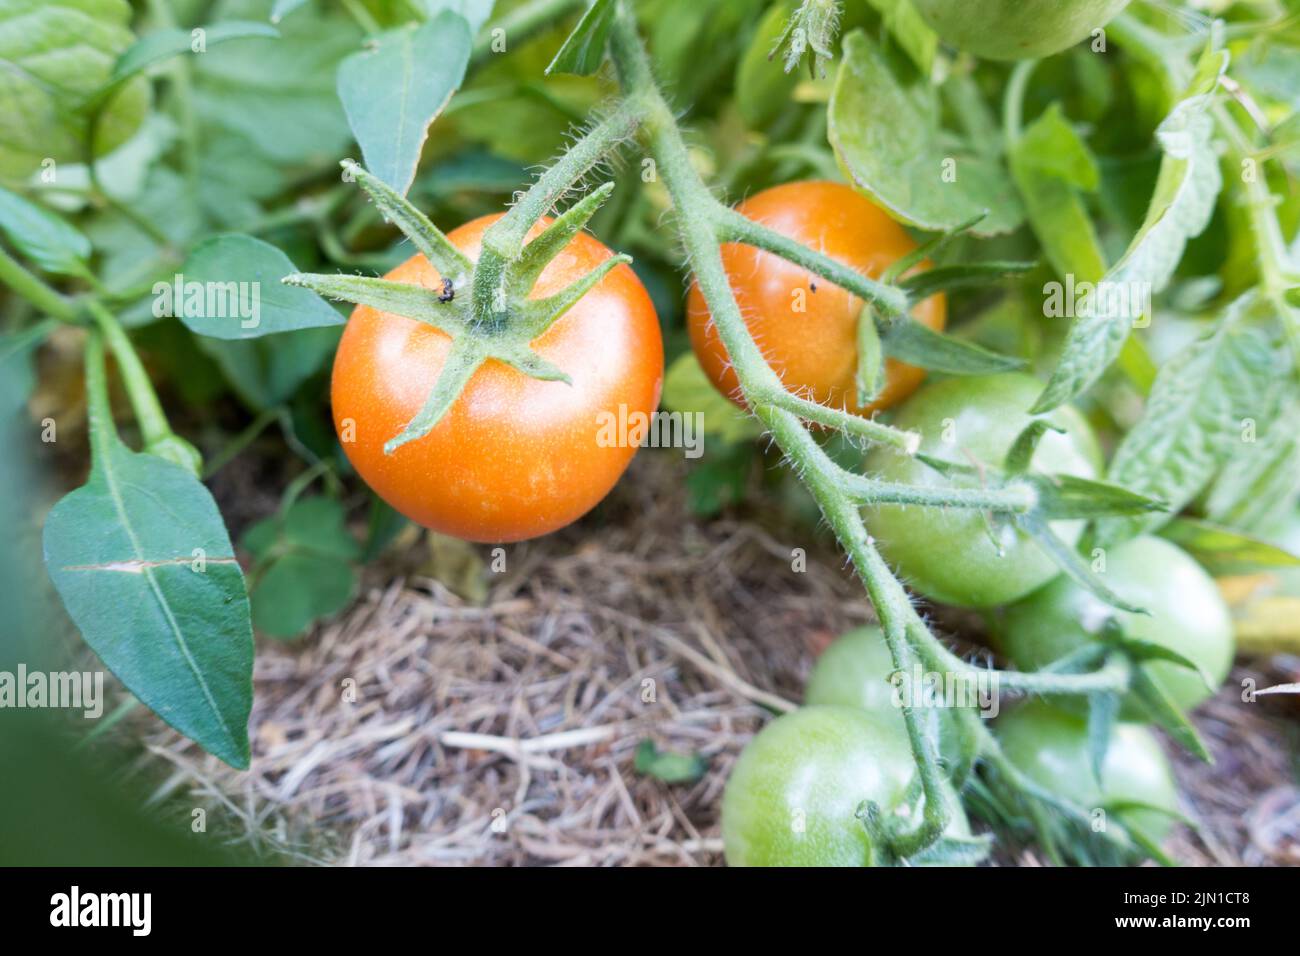 Gardeners delight tomato variety fruit ripen on plant Stock Photo